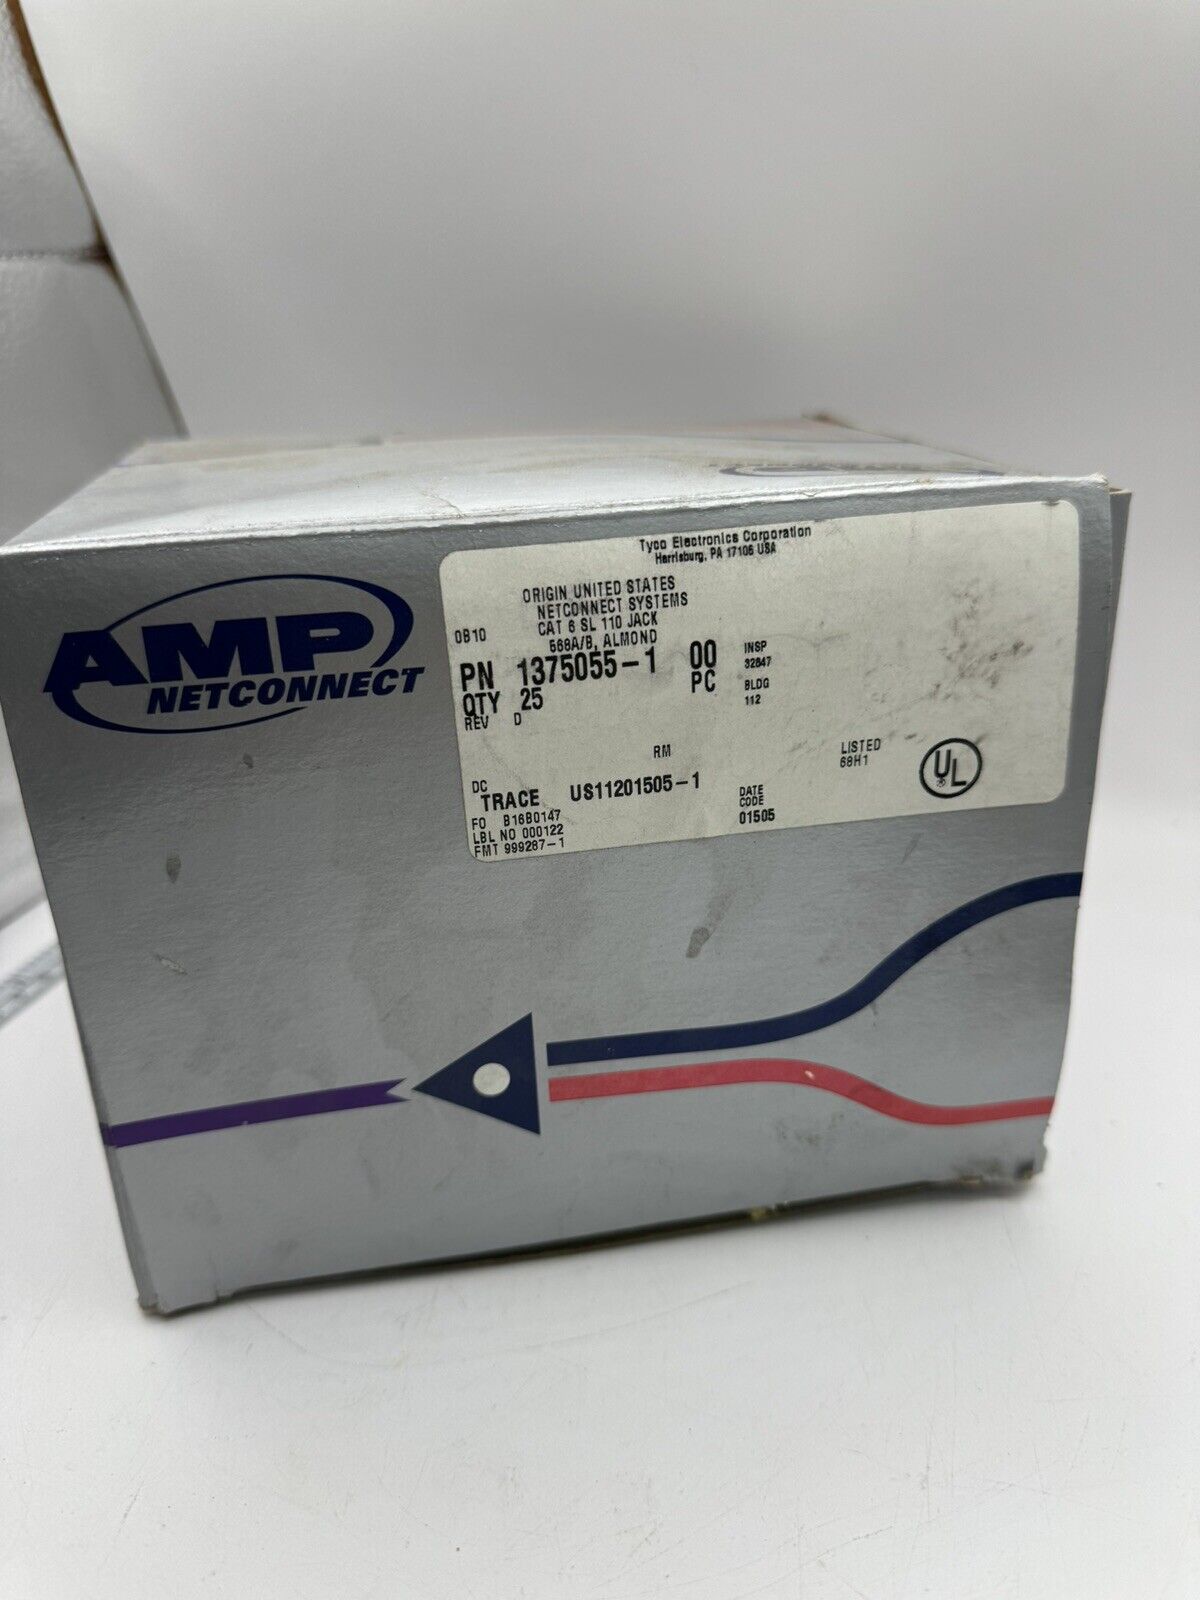 Box of 25, AMP NETCONNECT CAT 6 SL 110 JACK 568A/B ALMOND 1375055-1 NOS